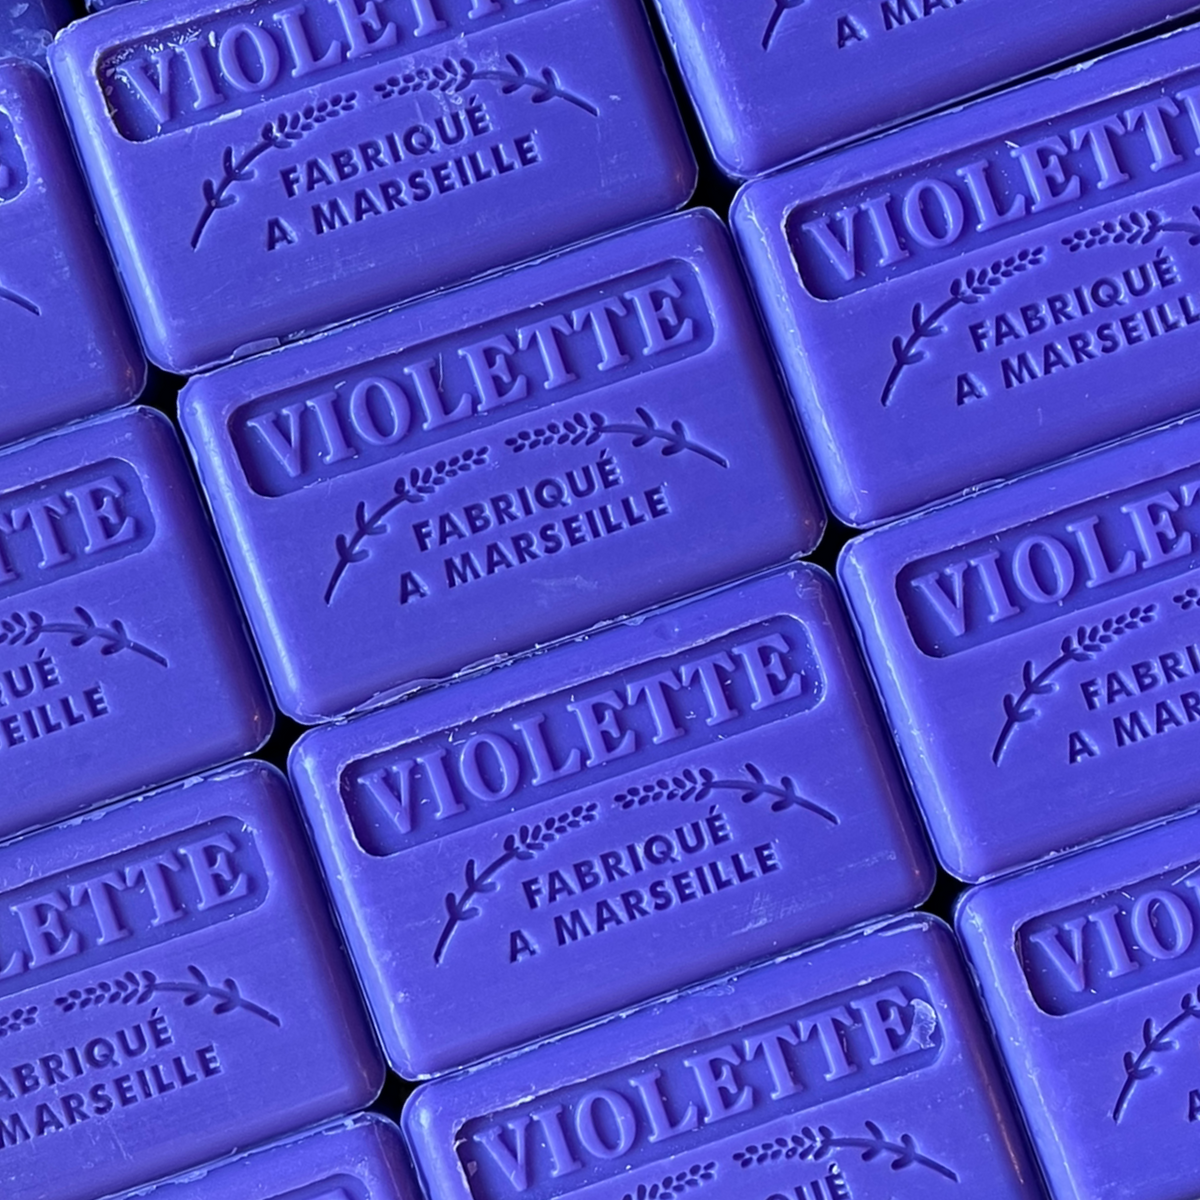  violet french soap